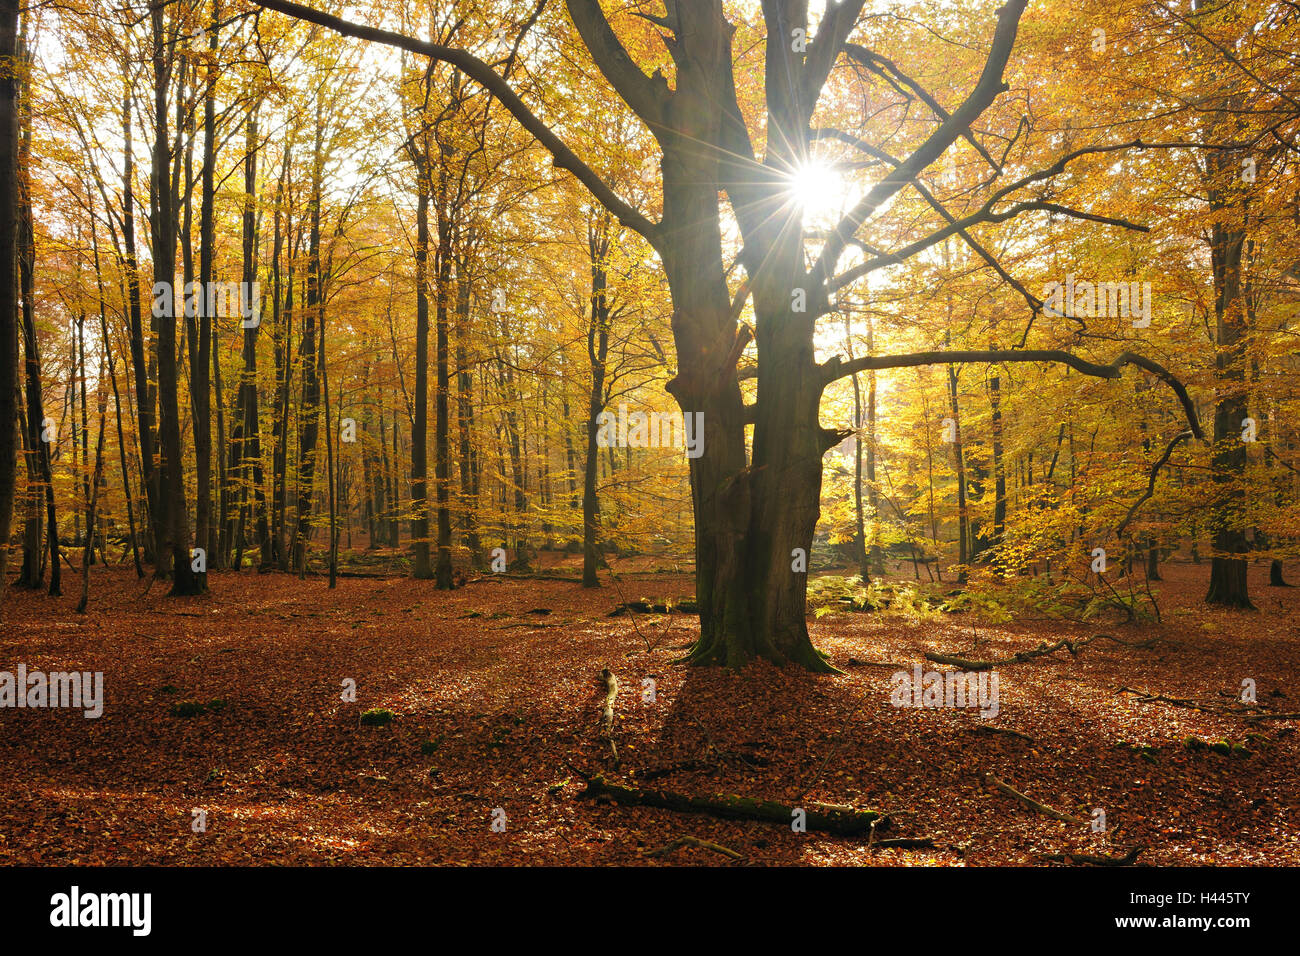 Germany, Hessen, Reinhardswald, Beech forest in autumn, Stock Photo